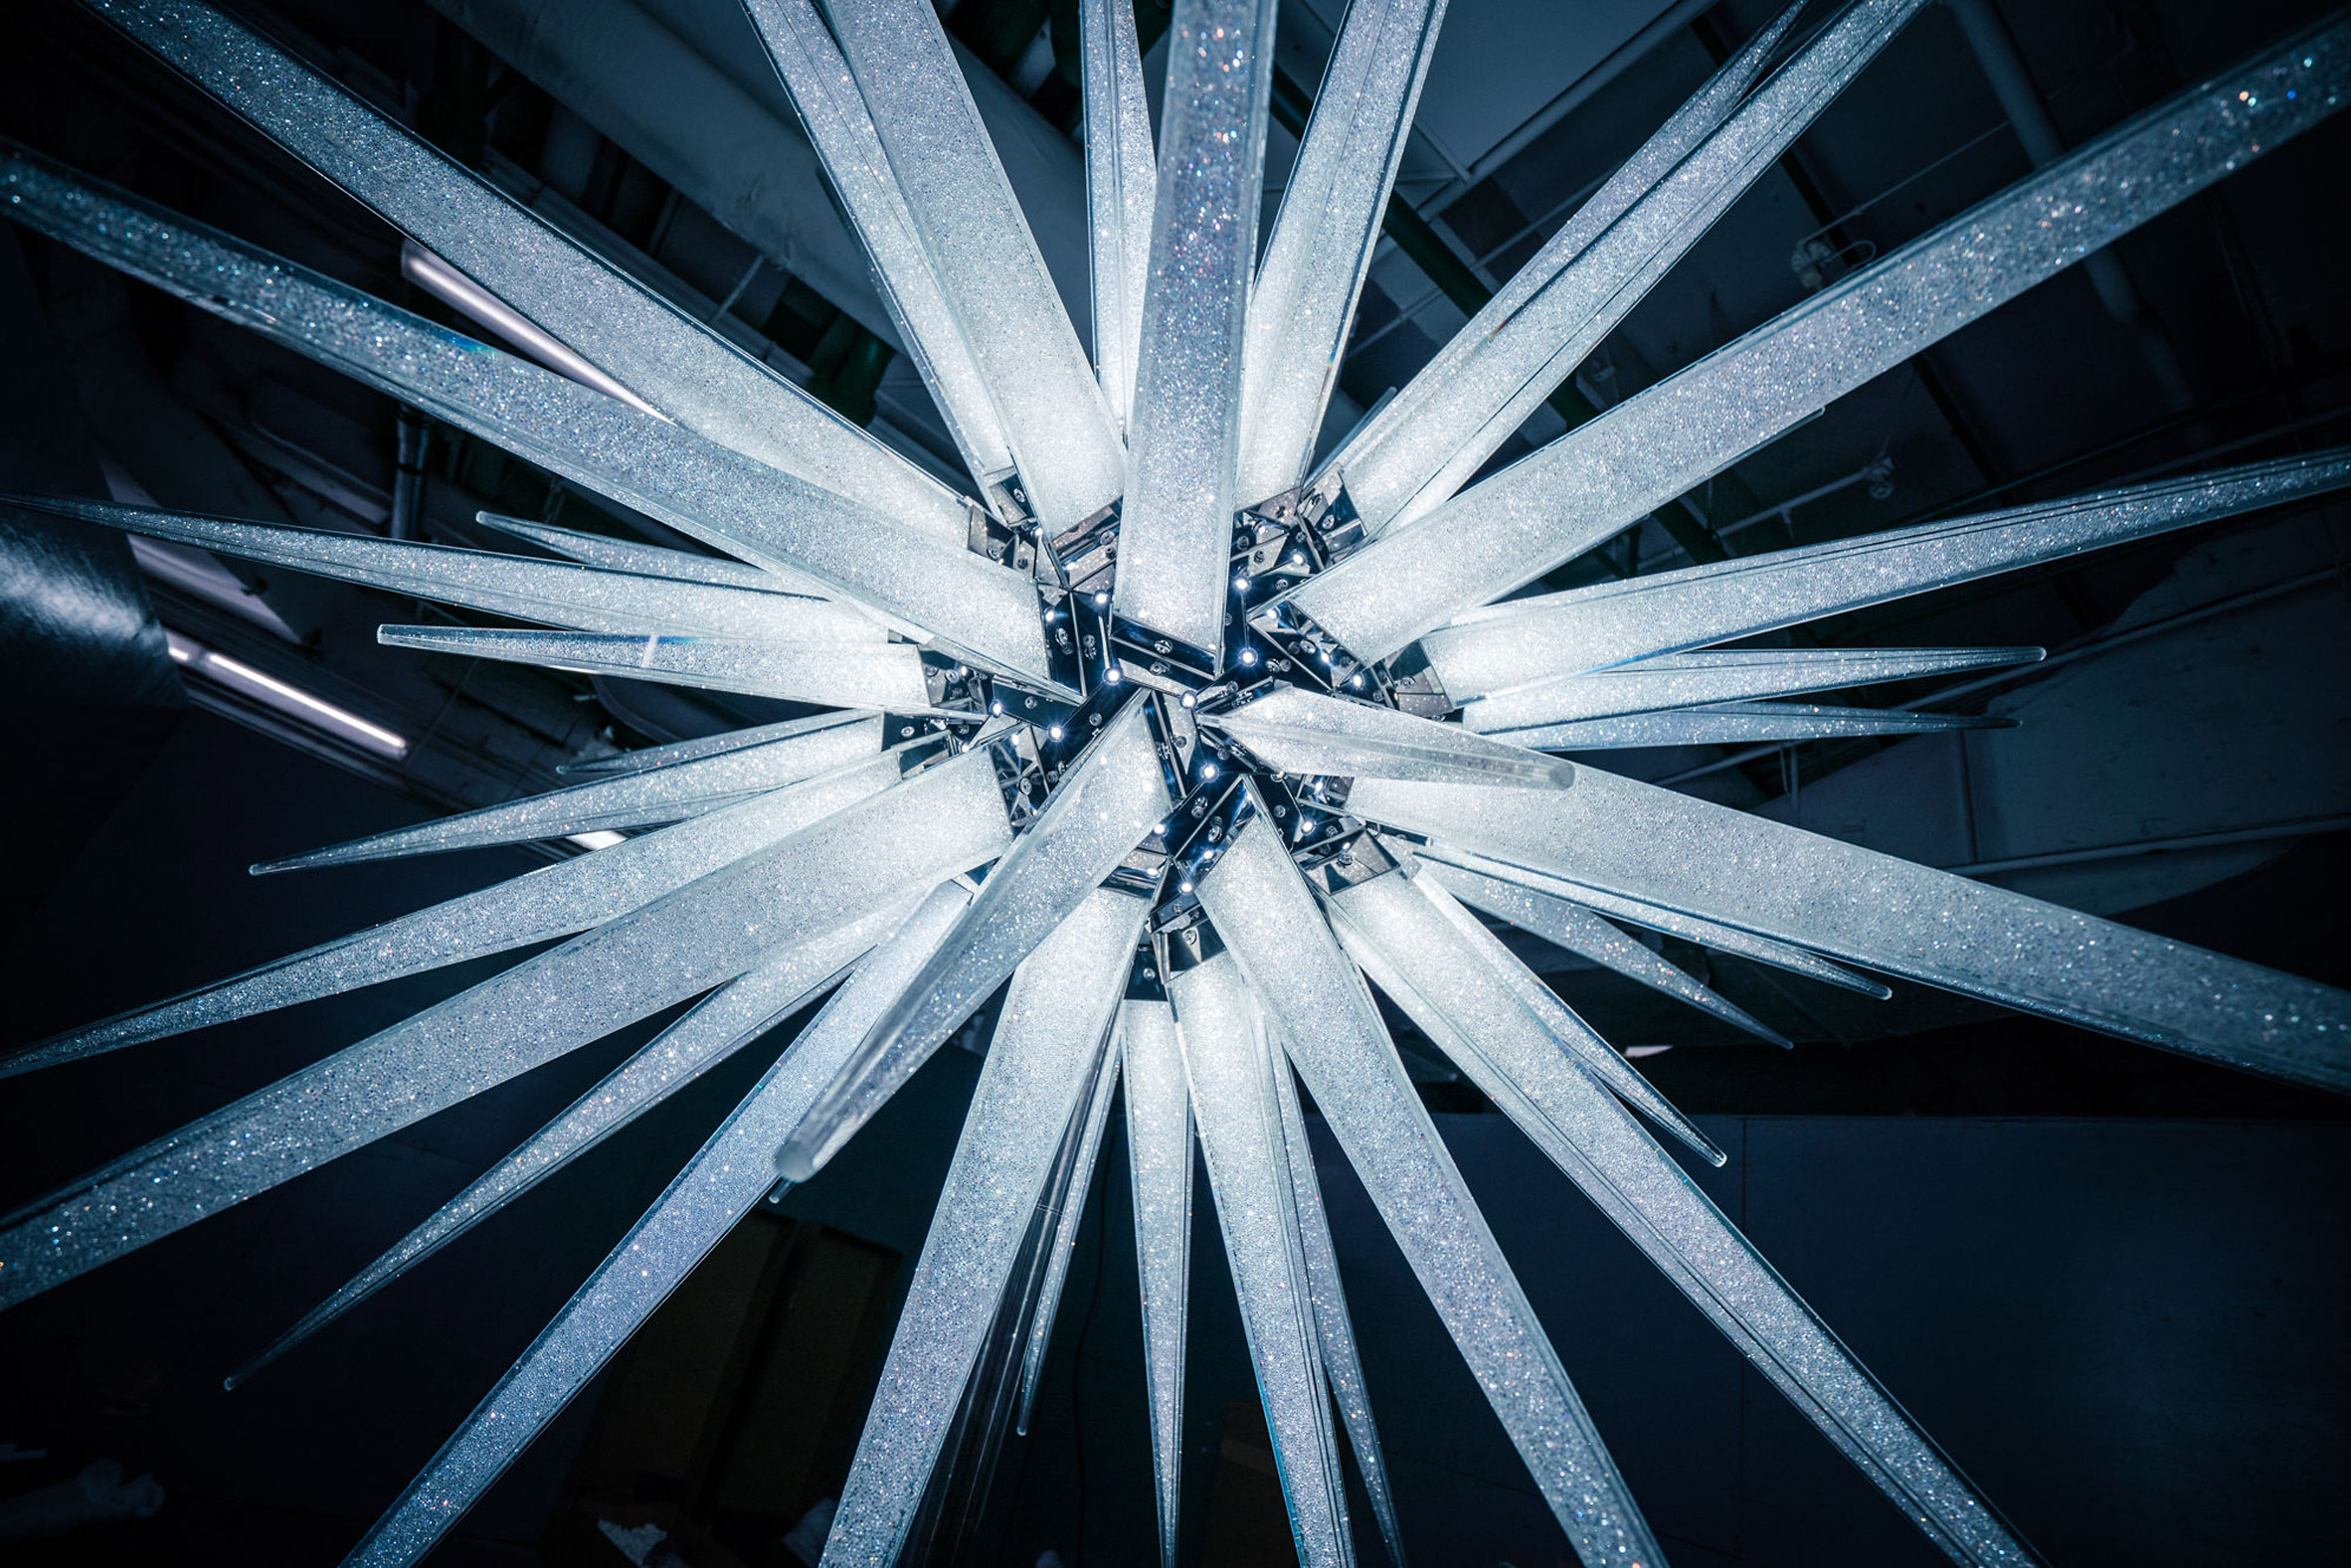 uitvinden beproeving Laboratorium Daniel Libeskind's Swarovski Star for Rockefeller Center Christmas tree